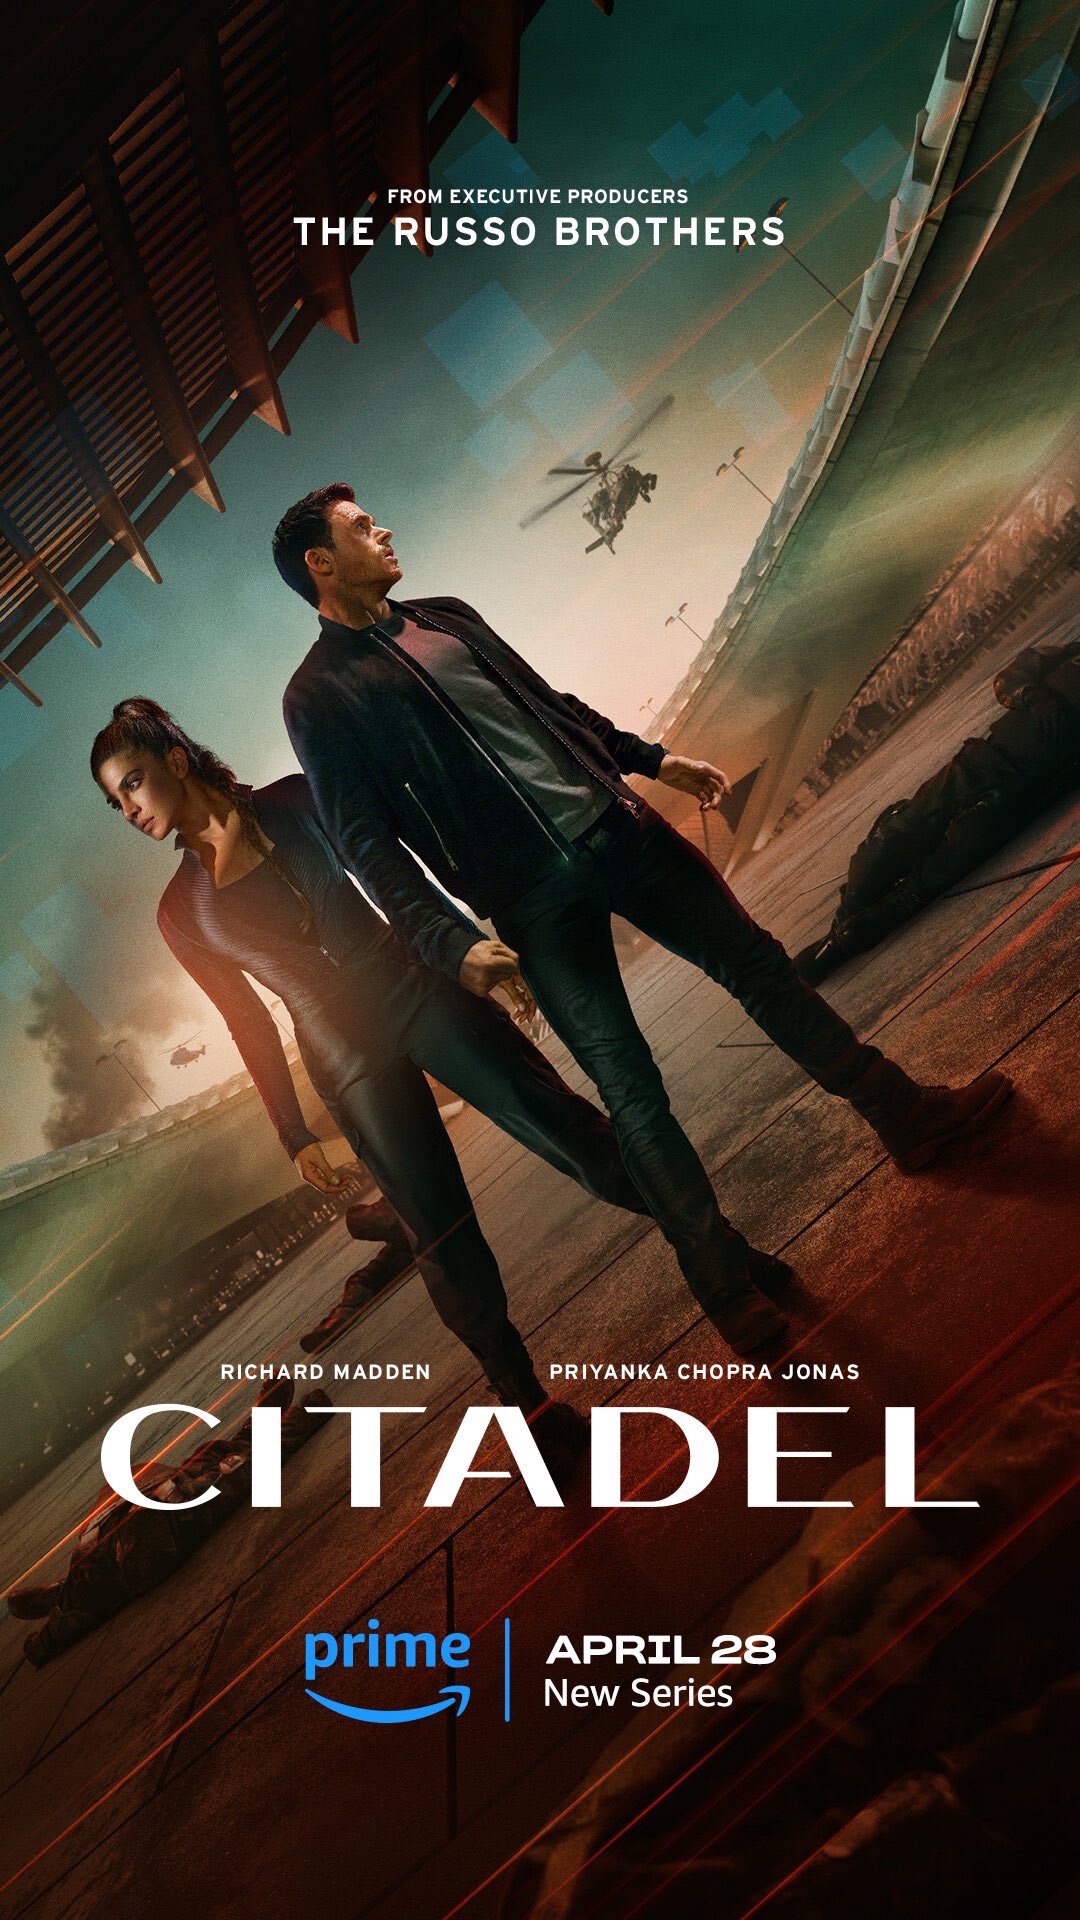 Priyanka Chopra on the poster of Citadel